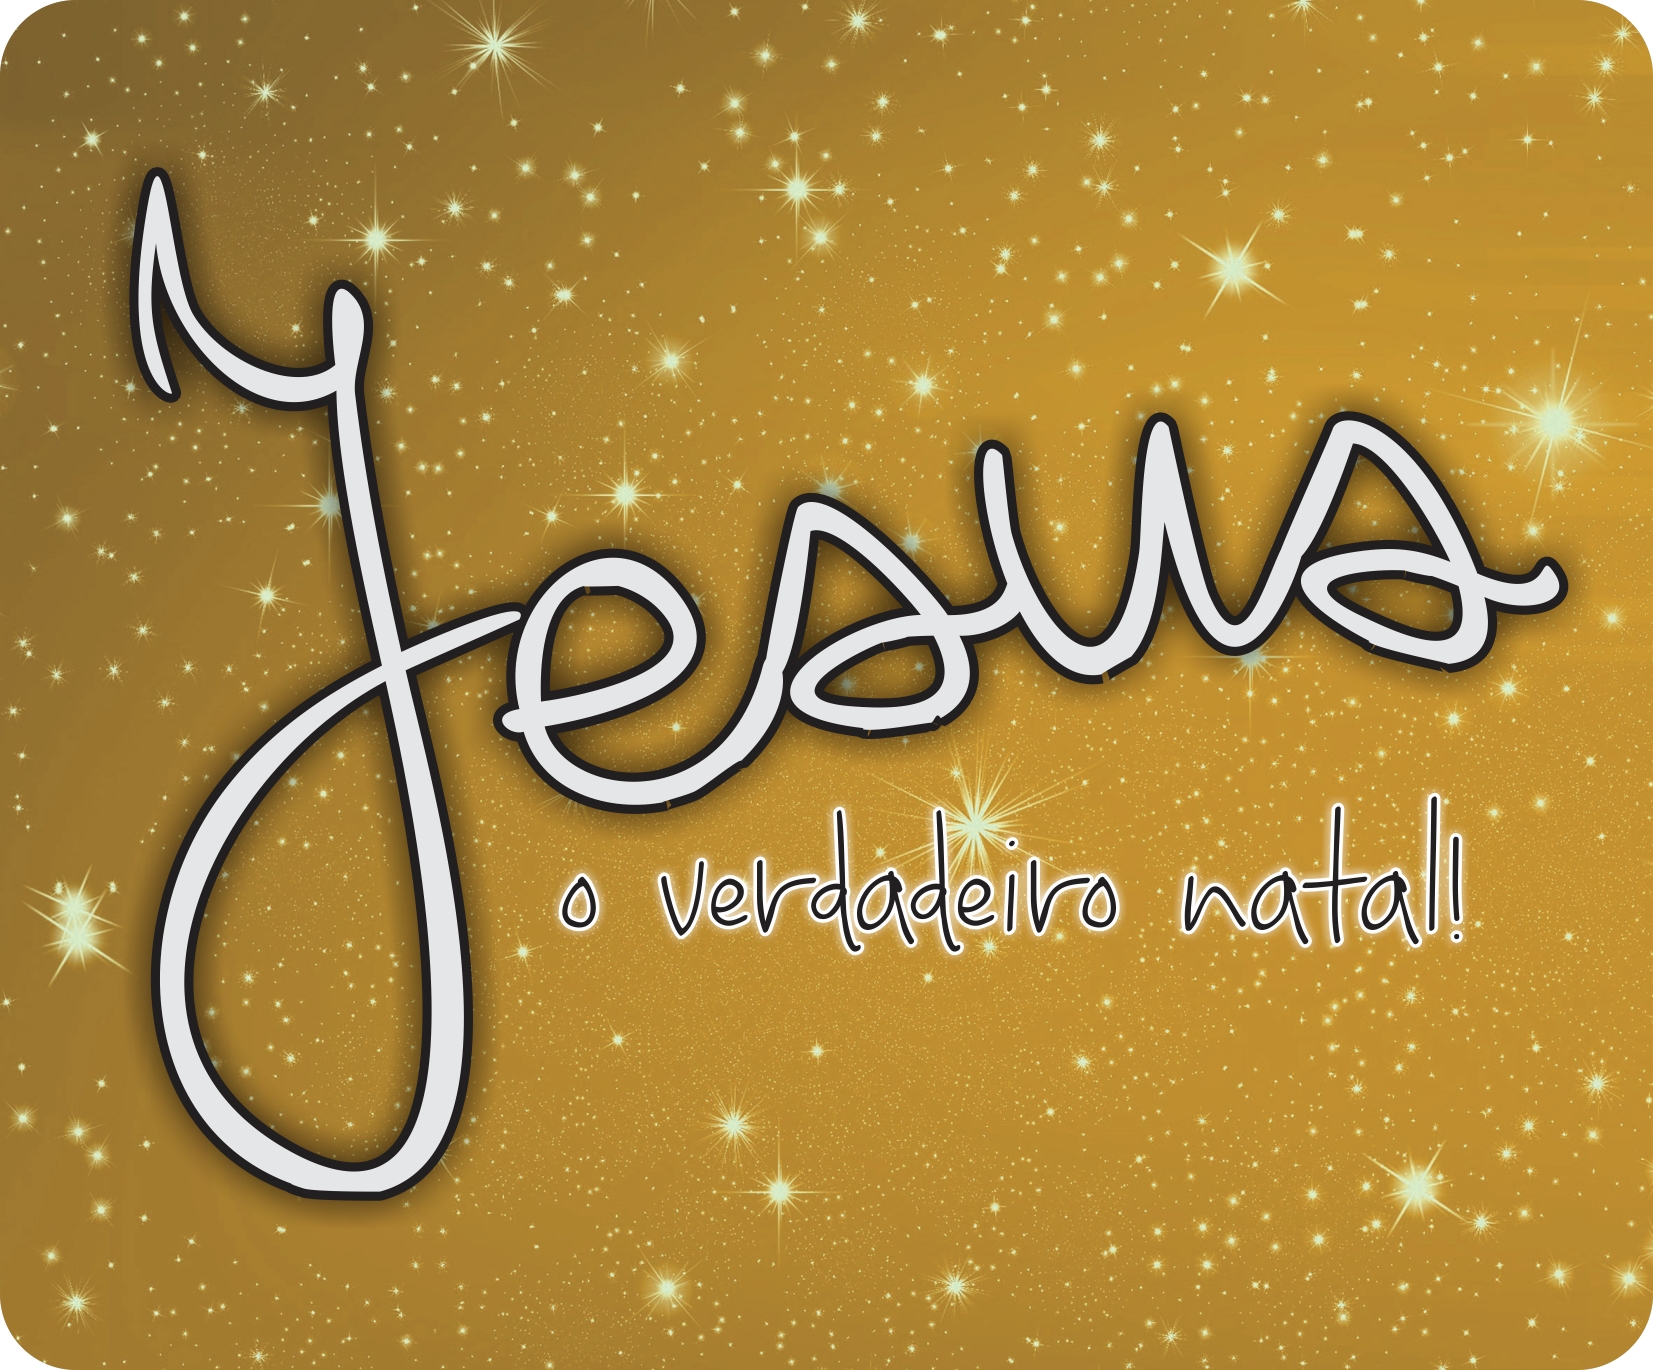 Jesus - O Verdadeiro Natal!